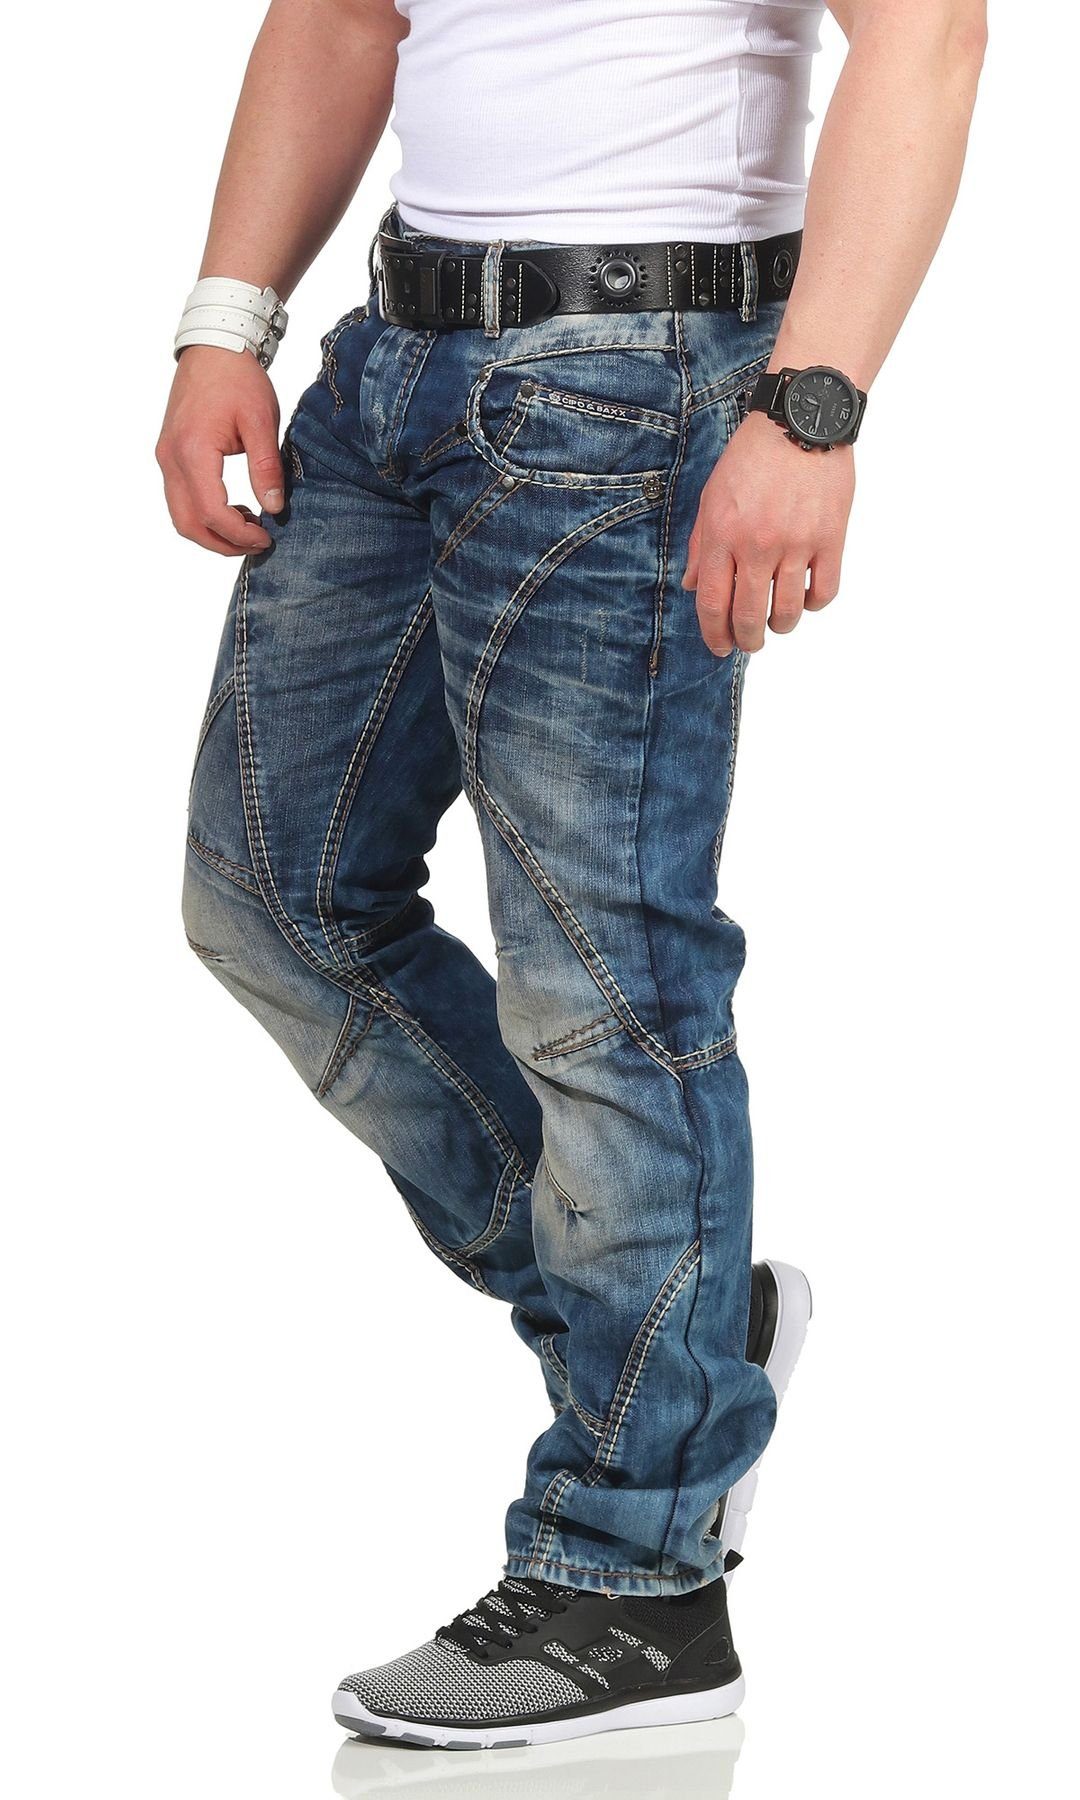 Cipo & Baxx C 1127 Herren Jeans Hose Jeanshose Denim blau dicke Kontrast Naht 